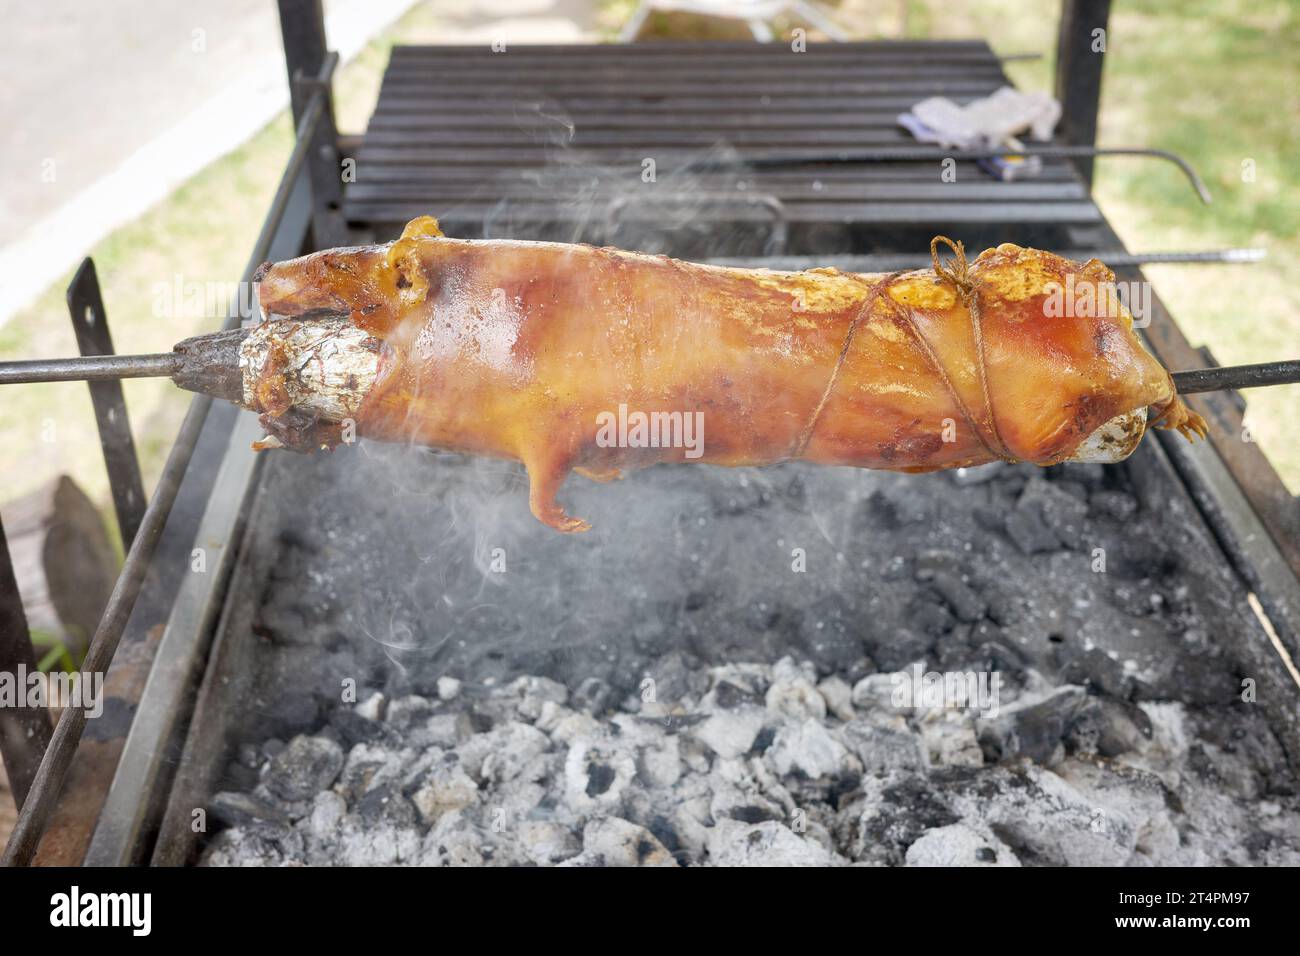 Close up photo of a roasted guinea pig on a grill, selective focus, Ecuador. Stock Photo